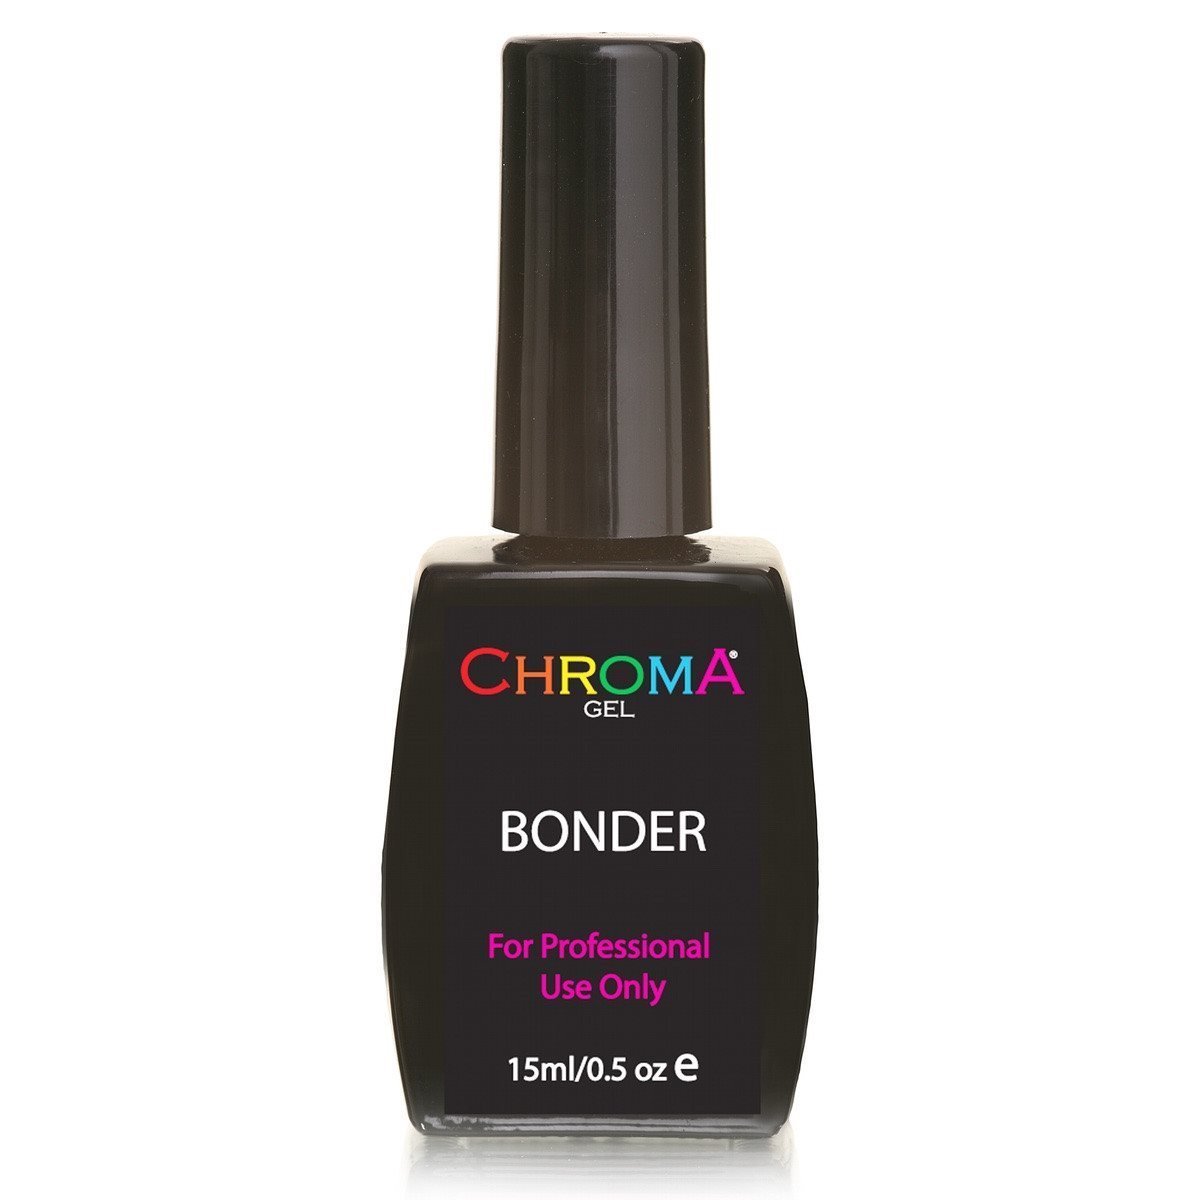 Chroma Gel Bonder - Long-Lasting Hold for Flawless Gel Manicures - beautyhair.co.ukChroma Gel